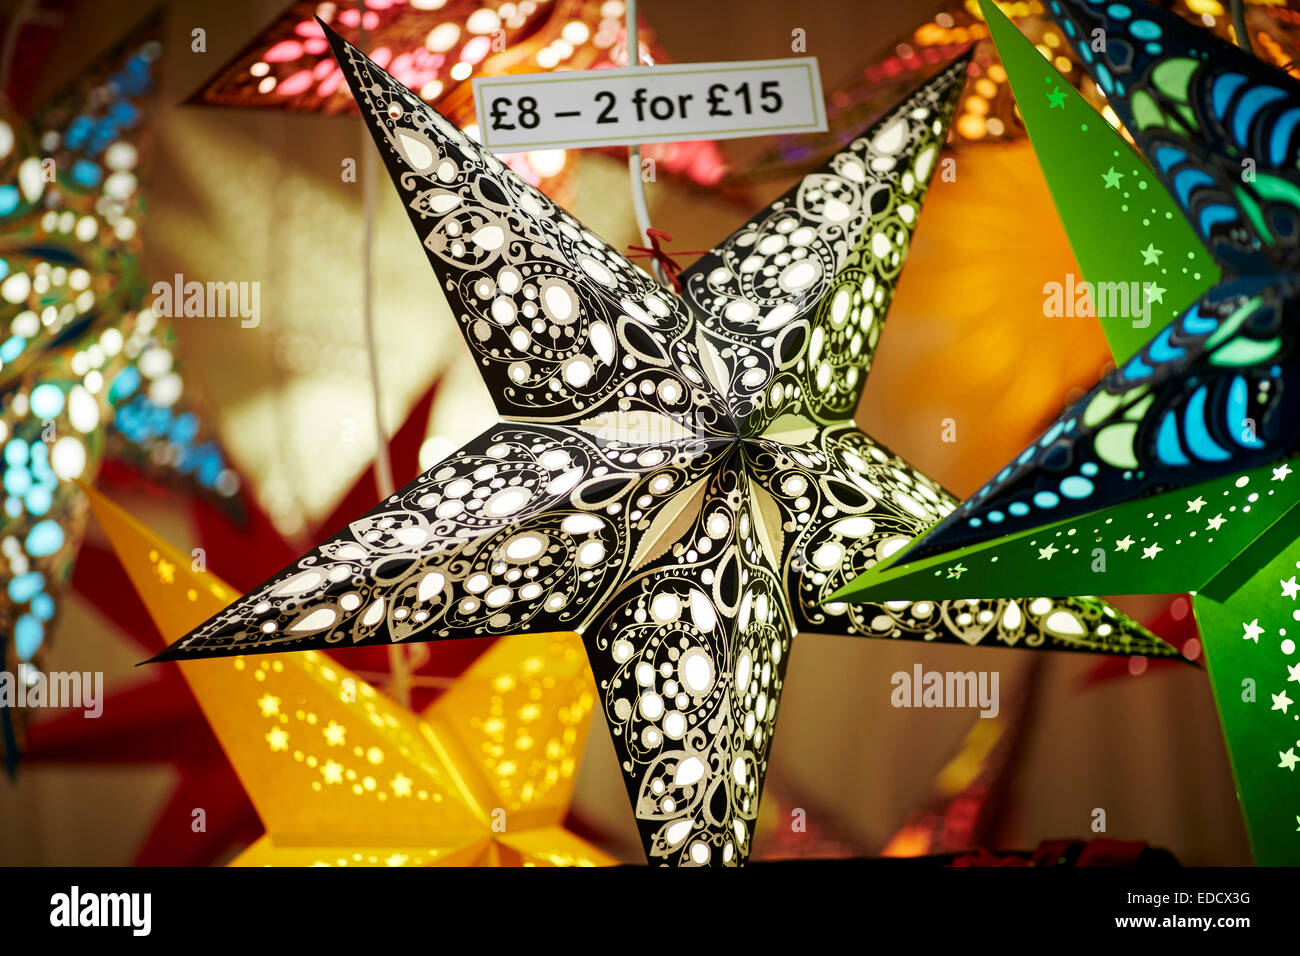 Decorative star lights shades at Manchester German Christmas Markets 2014 Stock Photo